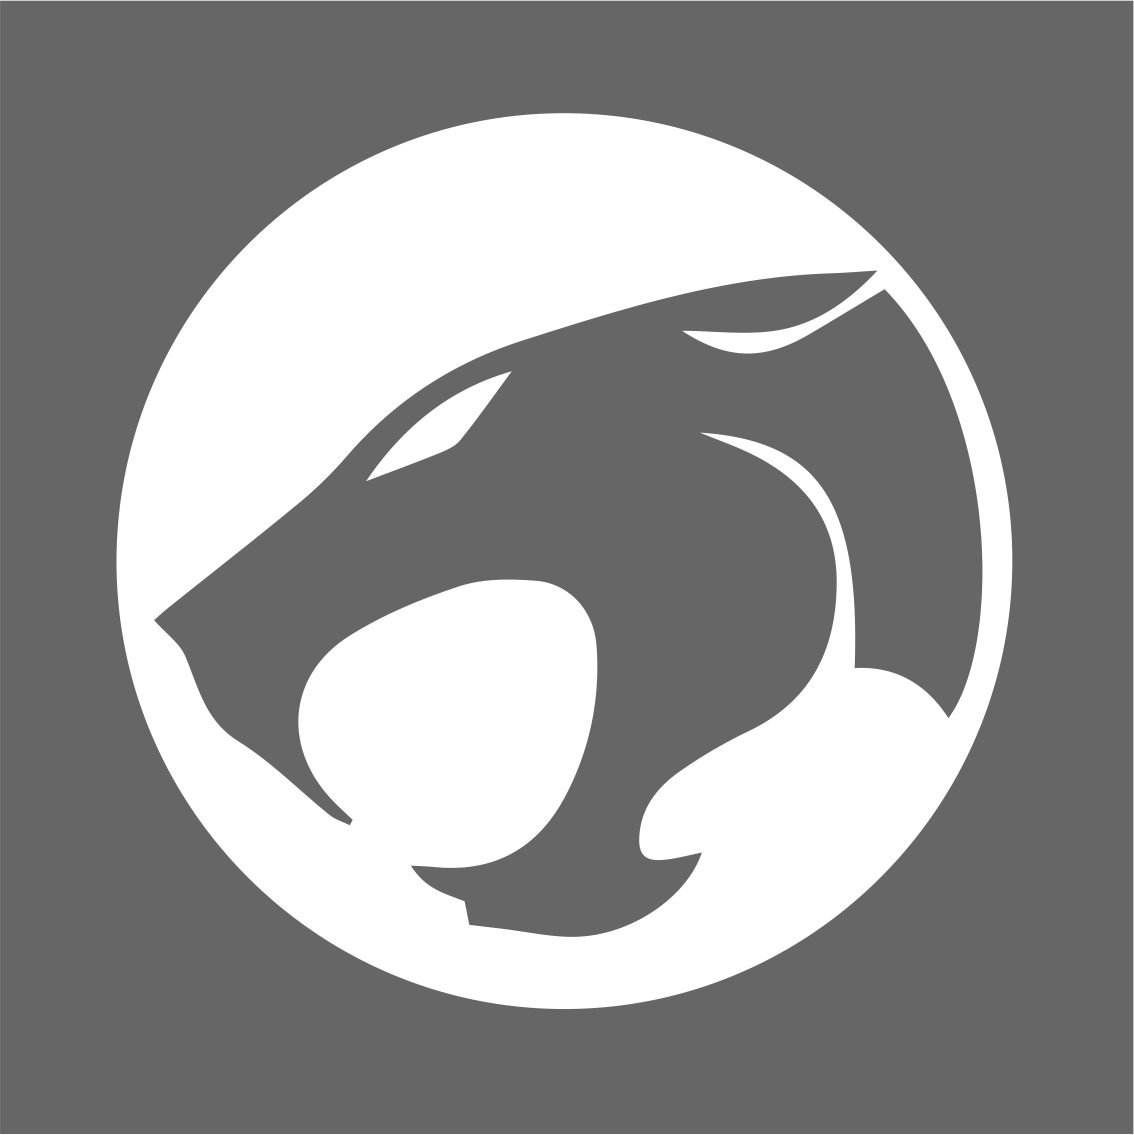 thundercats logo black and white